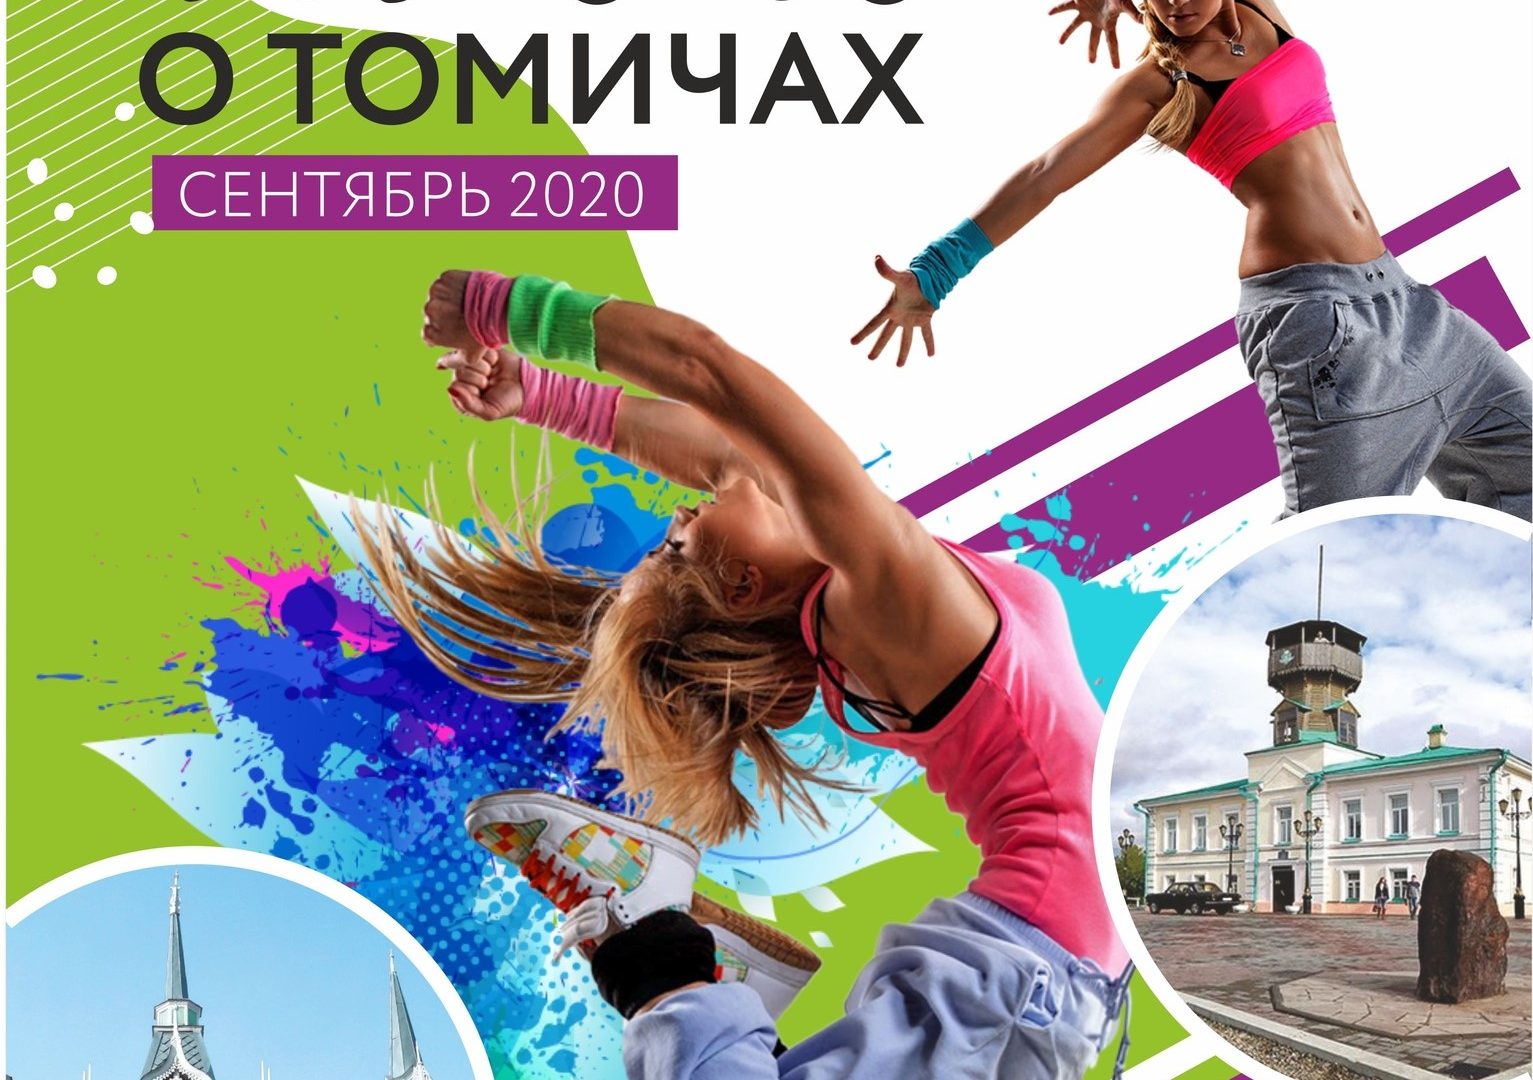 Марафон "Танцующий Томск-2020" в онлайн-формате